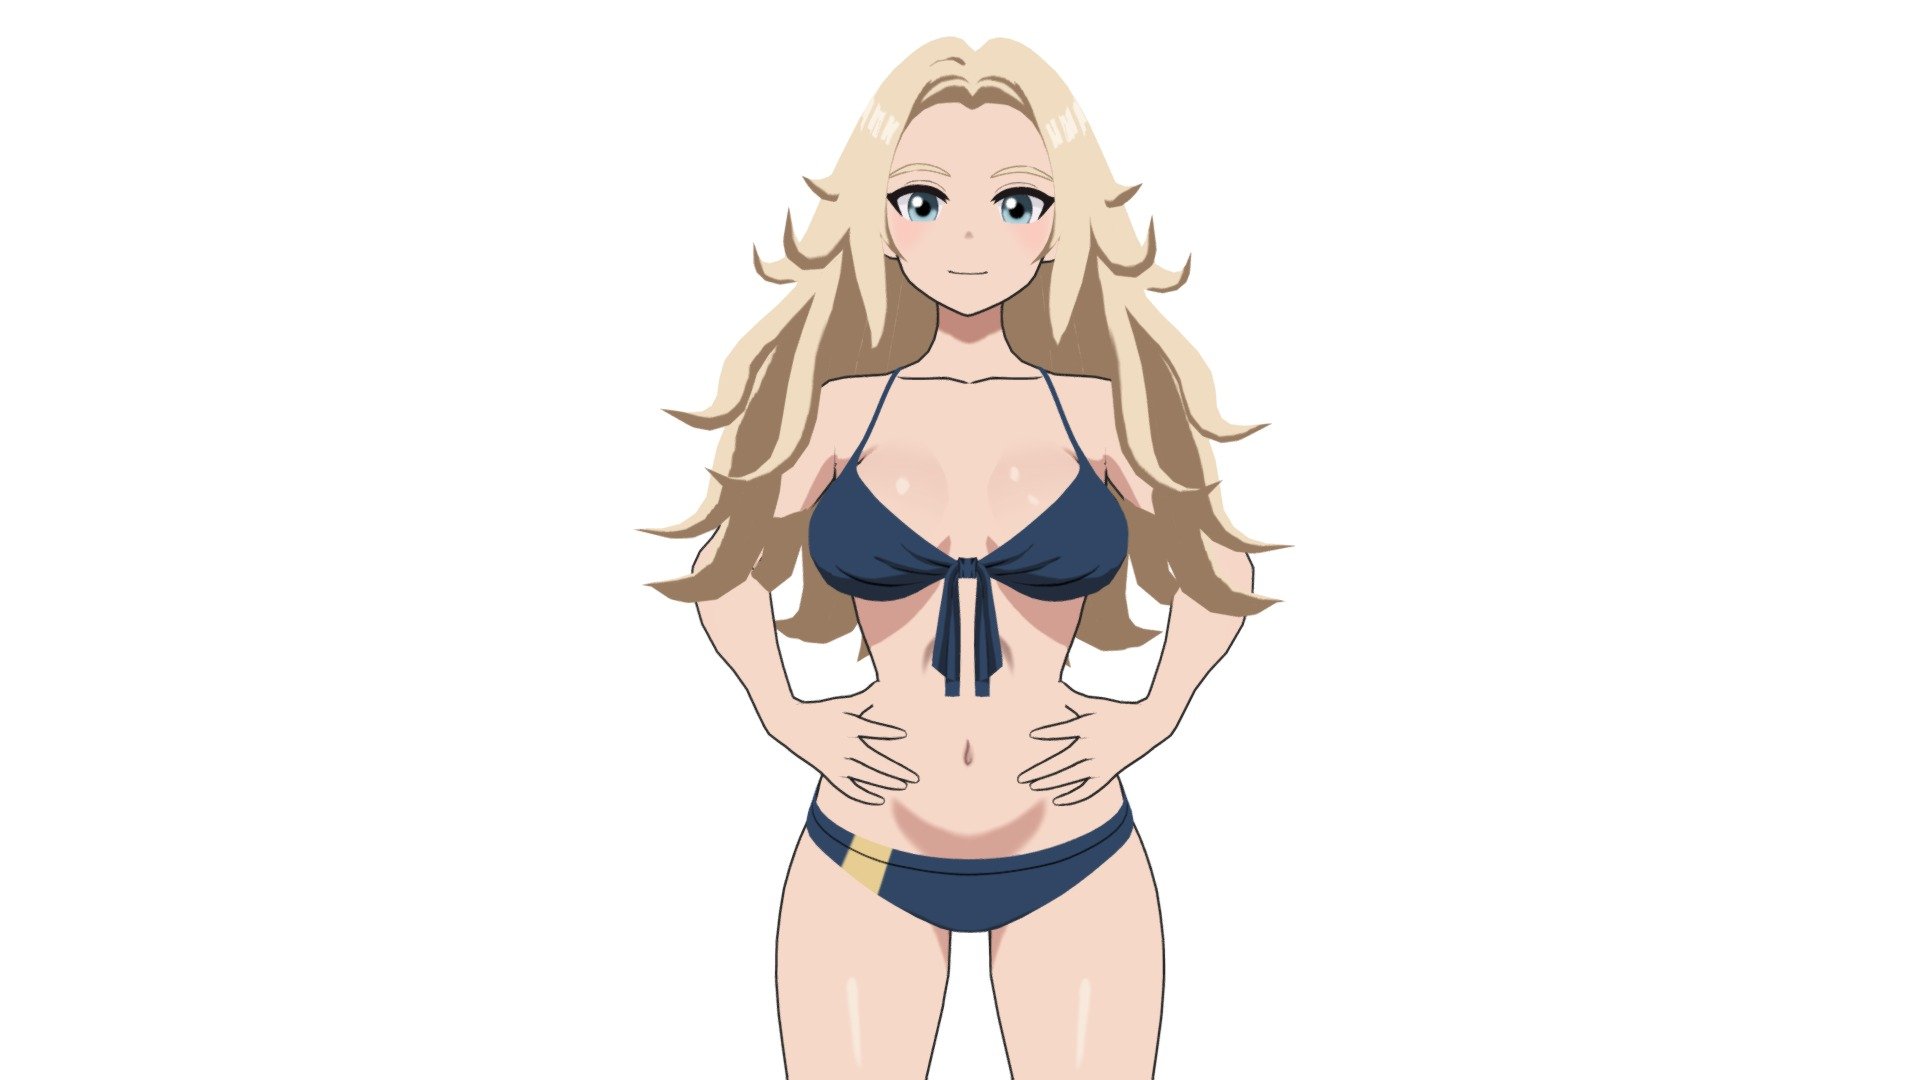 Harukana Receive] Female Bikini/Swimsuit Scenes (Individual Video Version)  : Funimation : Free Download, Borrow, and Streaming : Internet Archive